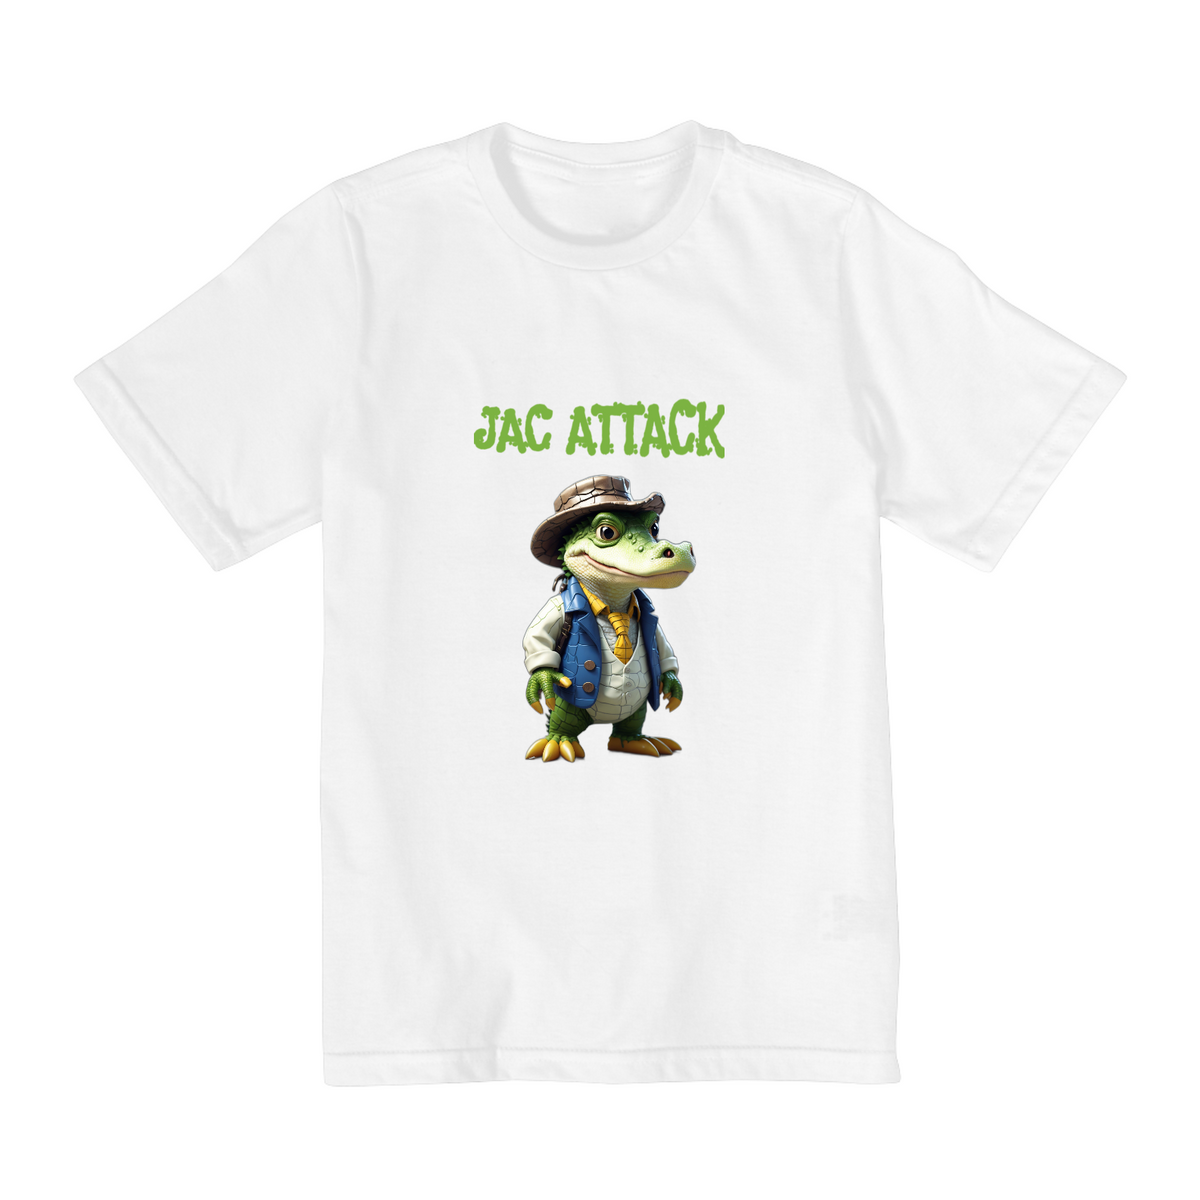 Nome do produto: JAC ATTACK